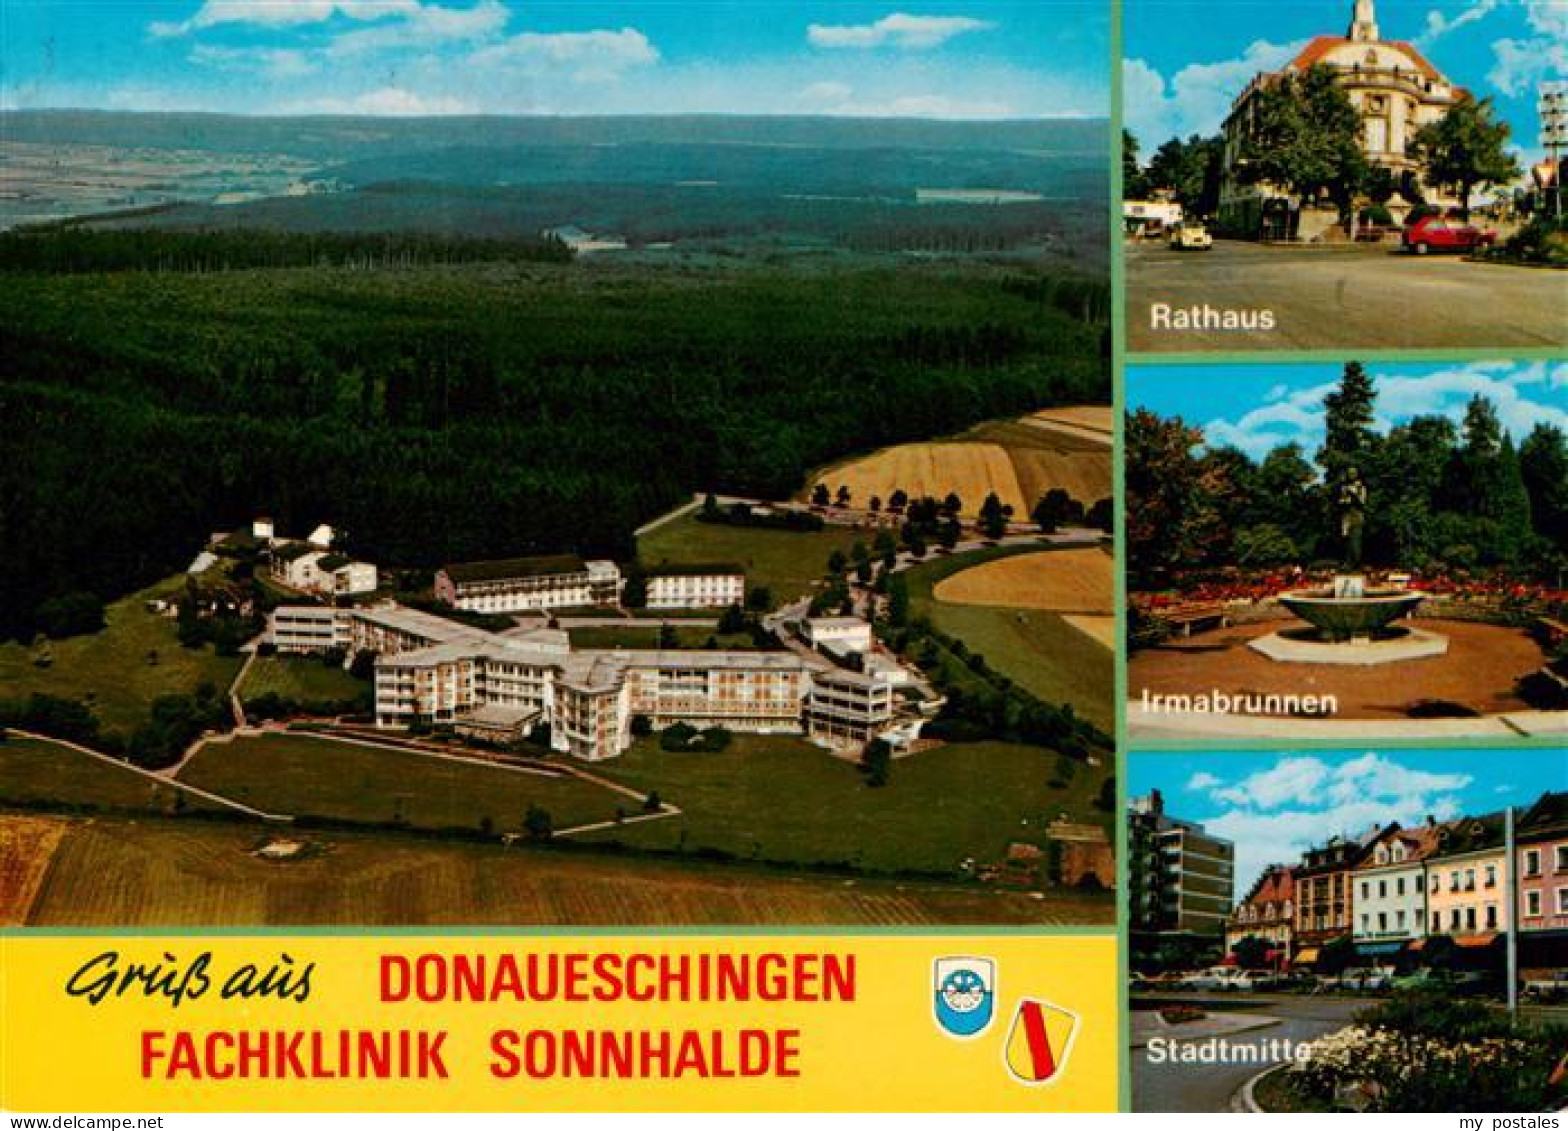 73927526 Donaueschingen Fachklinik Sonnhalde Fliegeraufnahme Rathaus Irmabrunnen - Donaueschingen